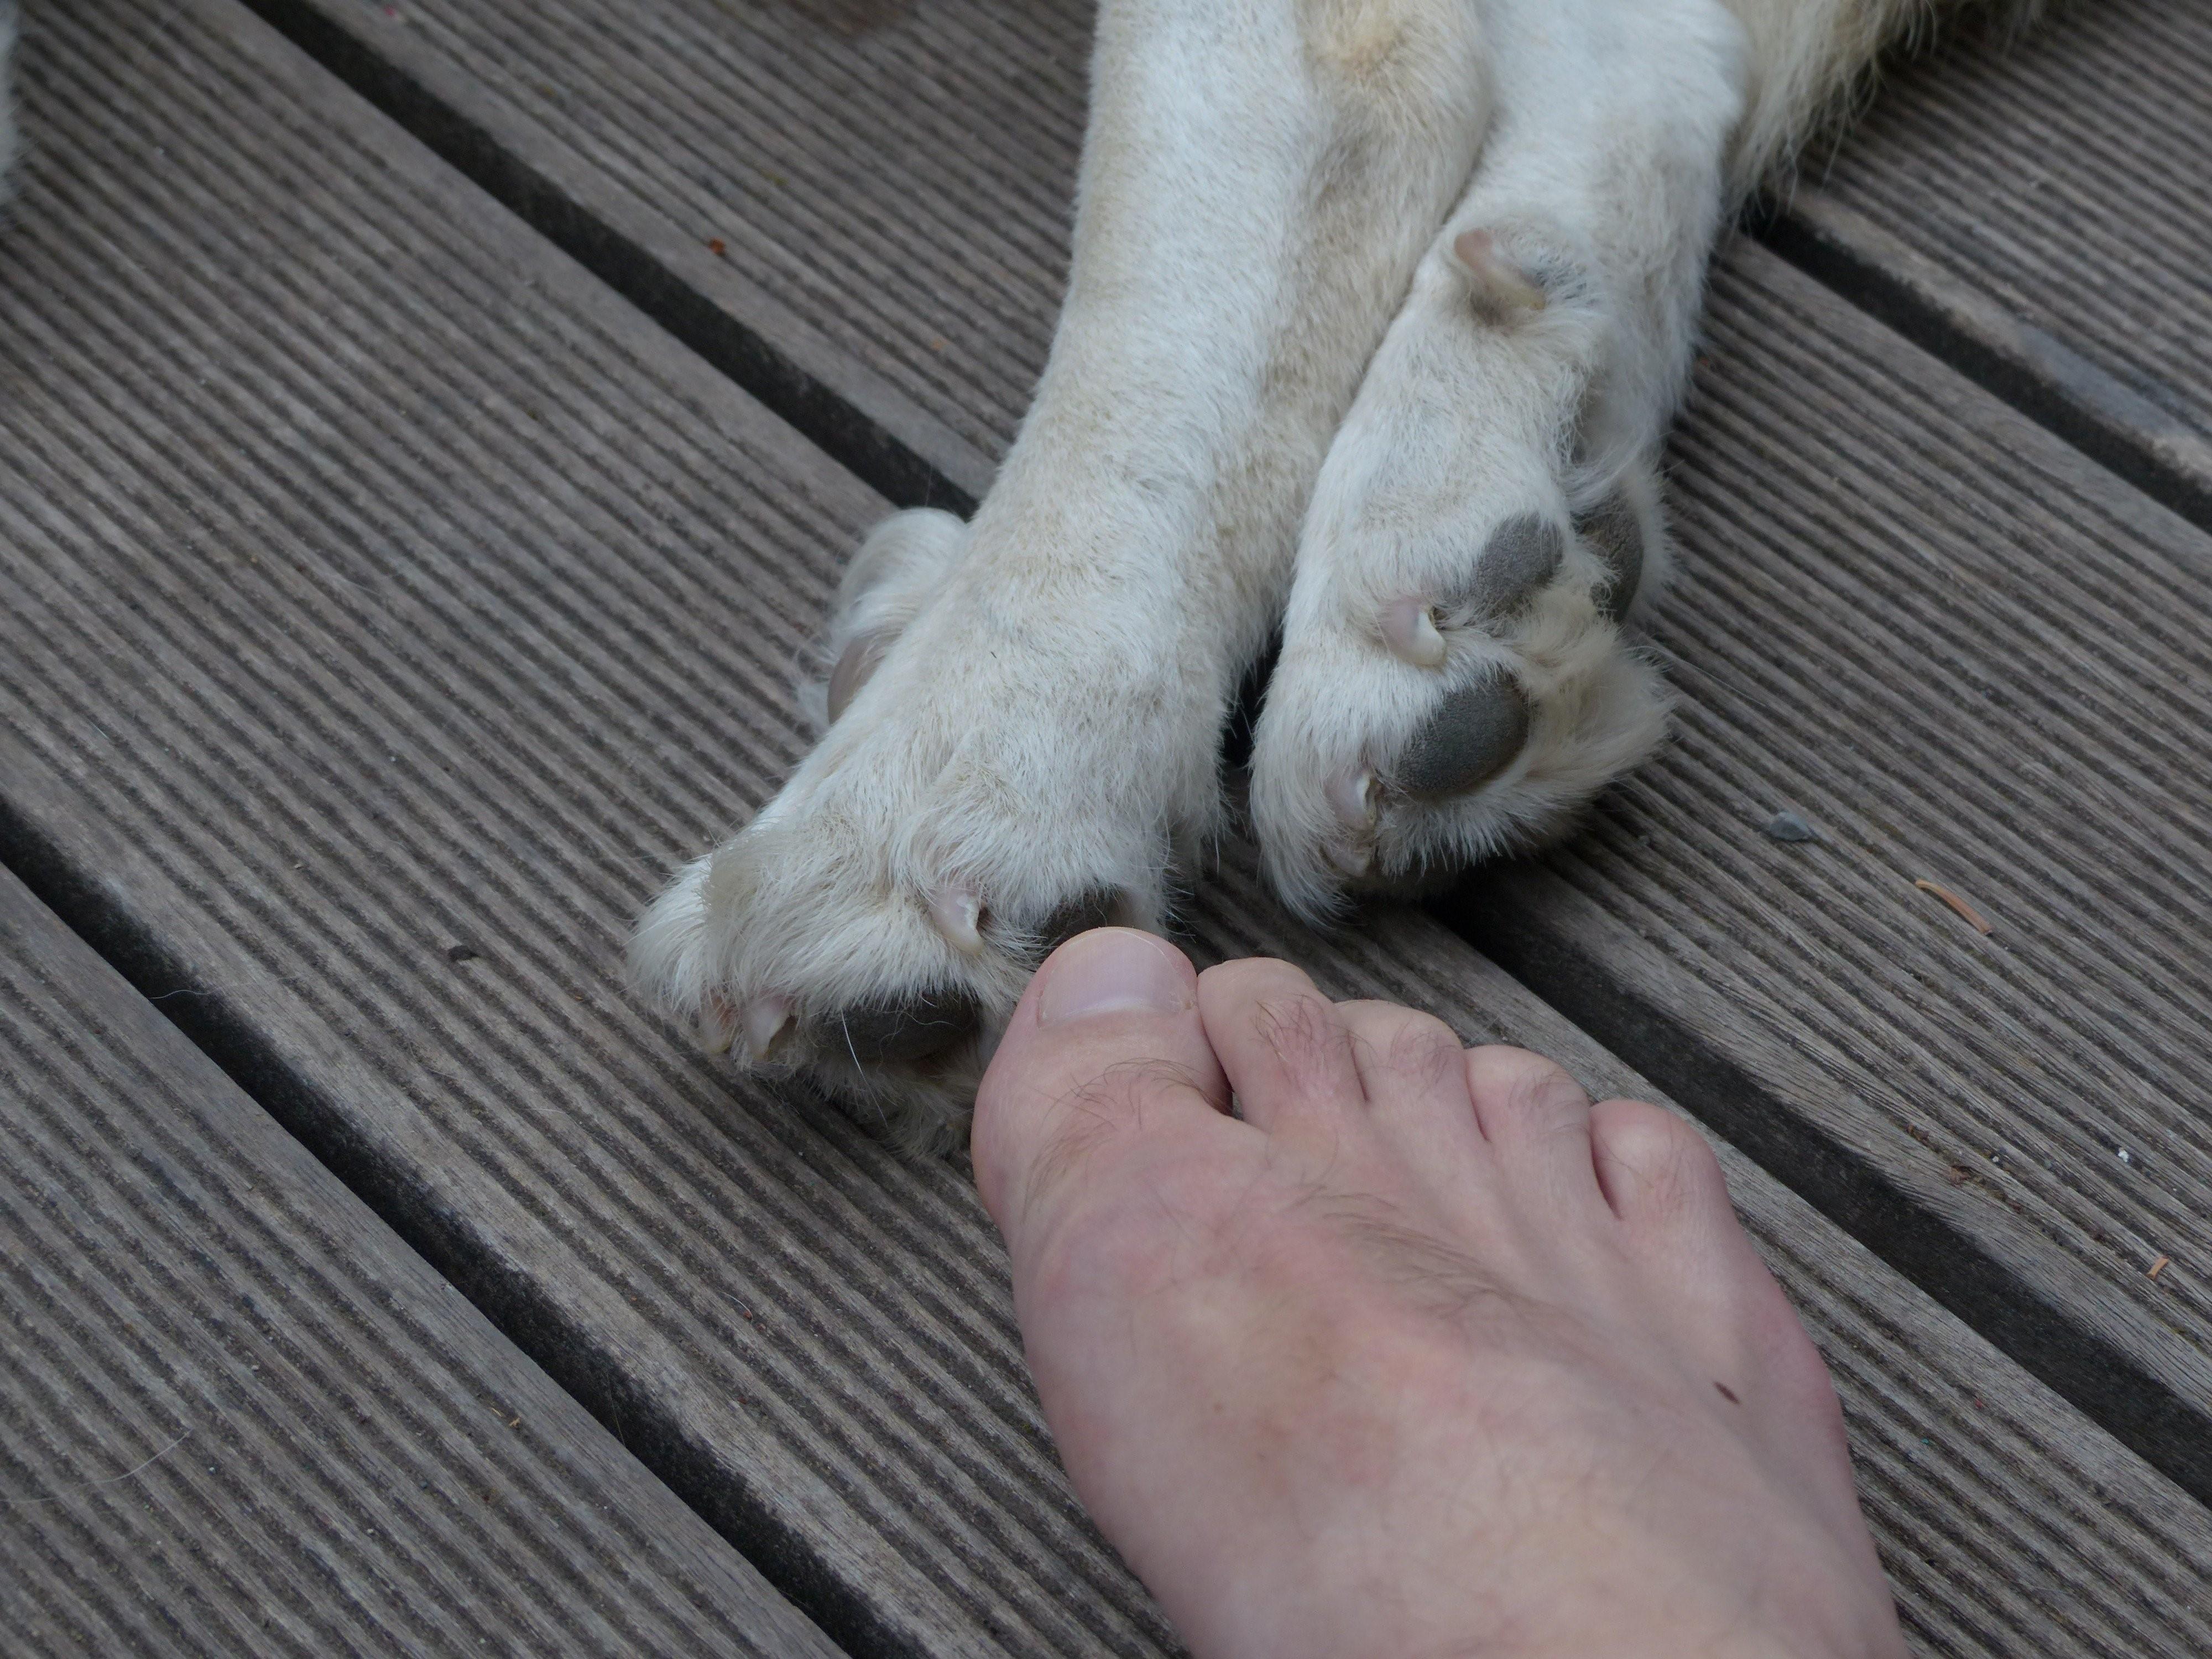 Feet dog. Лапка собаки. Собачья лапа. Собачья лапа фото.